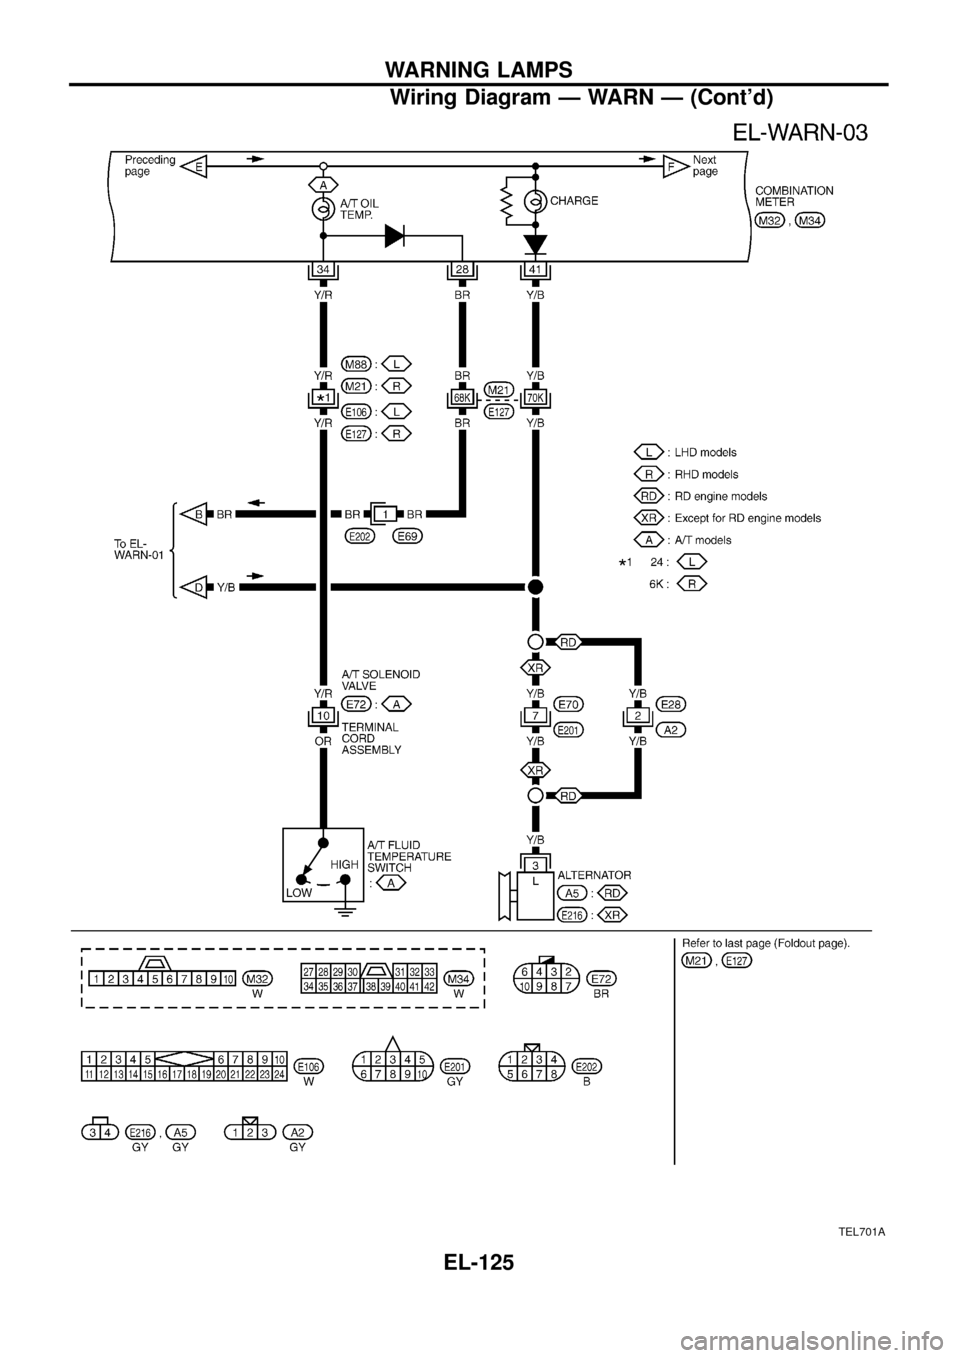 NISSAN PATROL 1998 Y61 / 5.G Electrical System User Guide TEL701A
WARNING LAMPS
Wiring Diagram Ð WARN Ð (Contd)
EL-125 